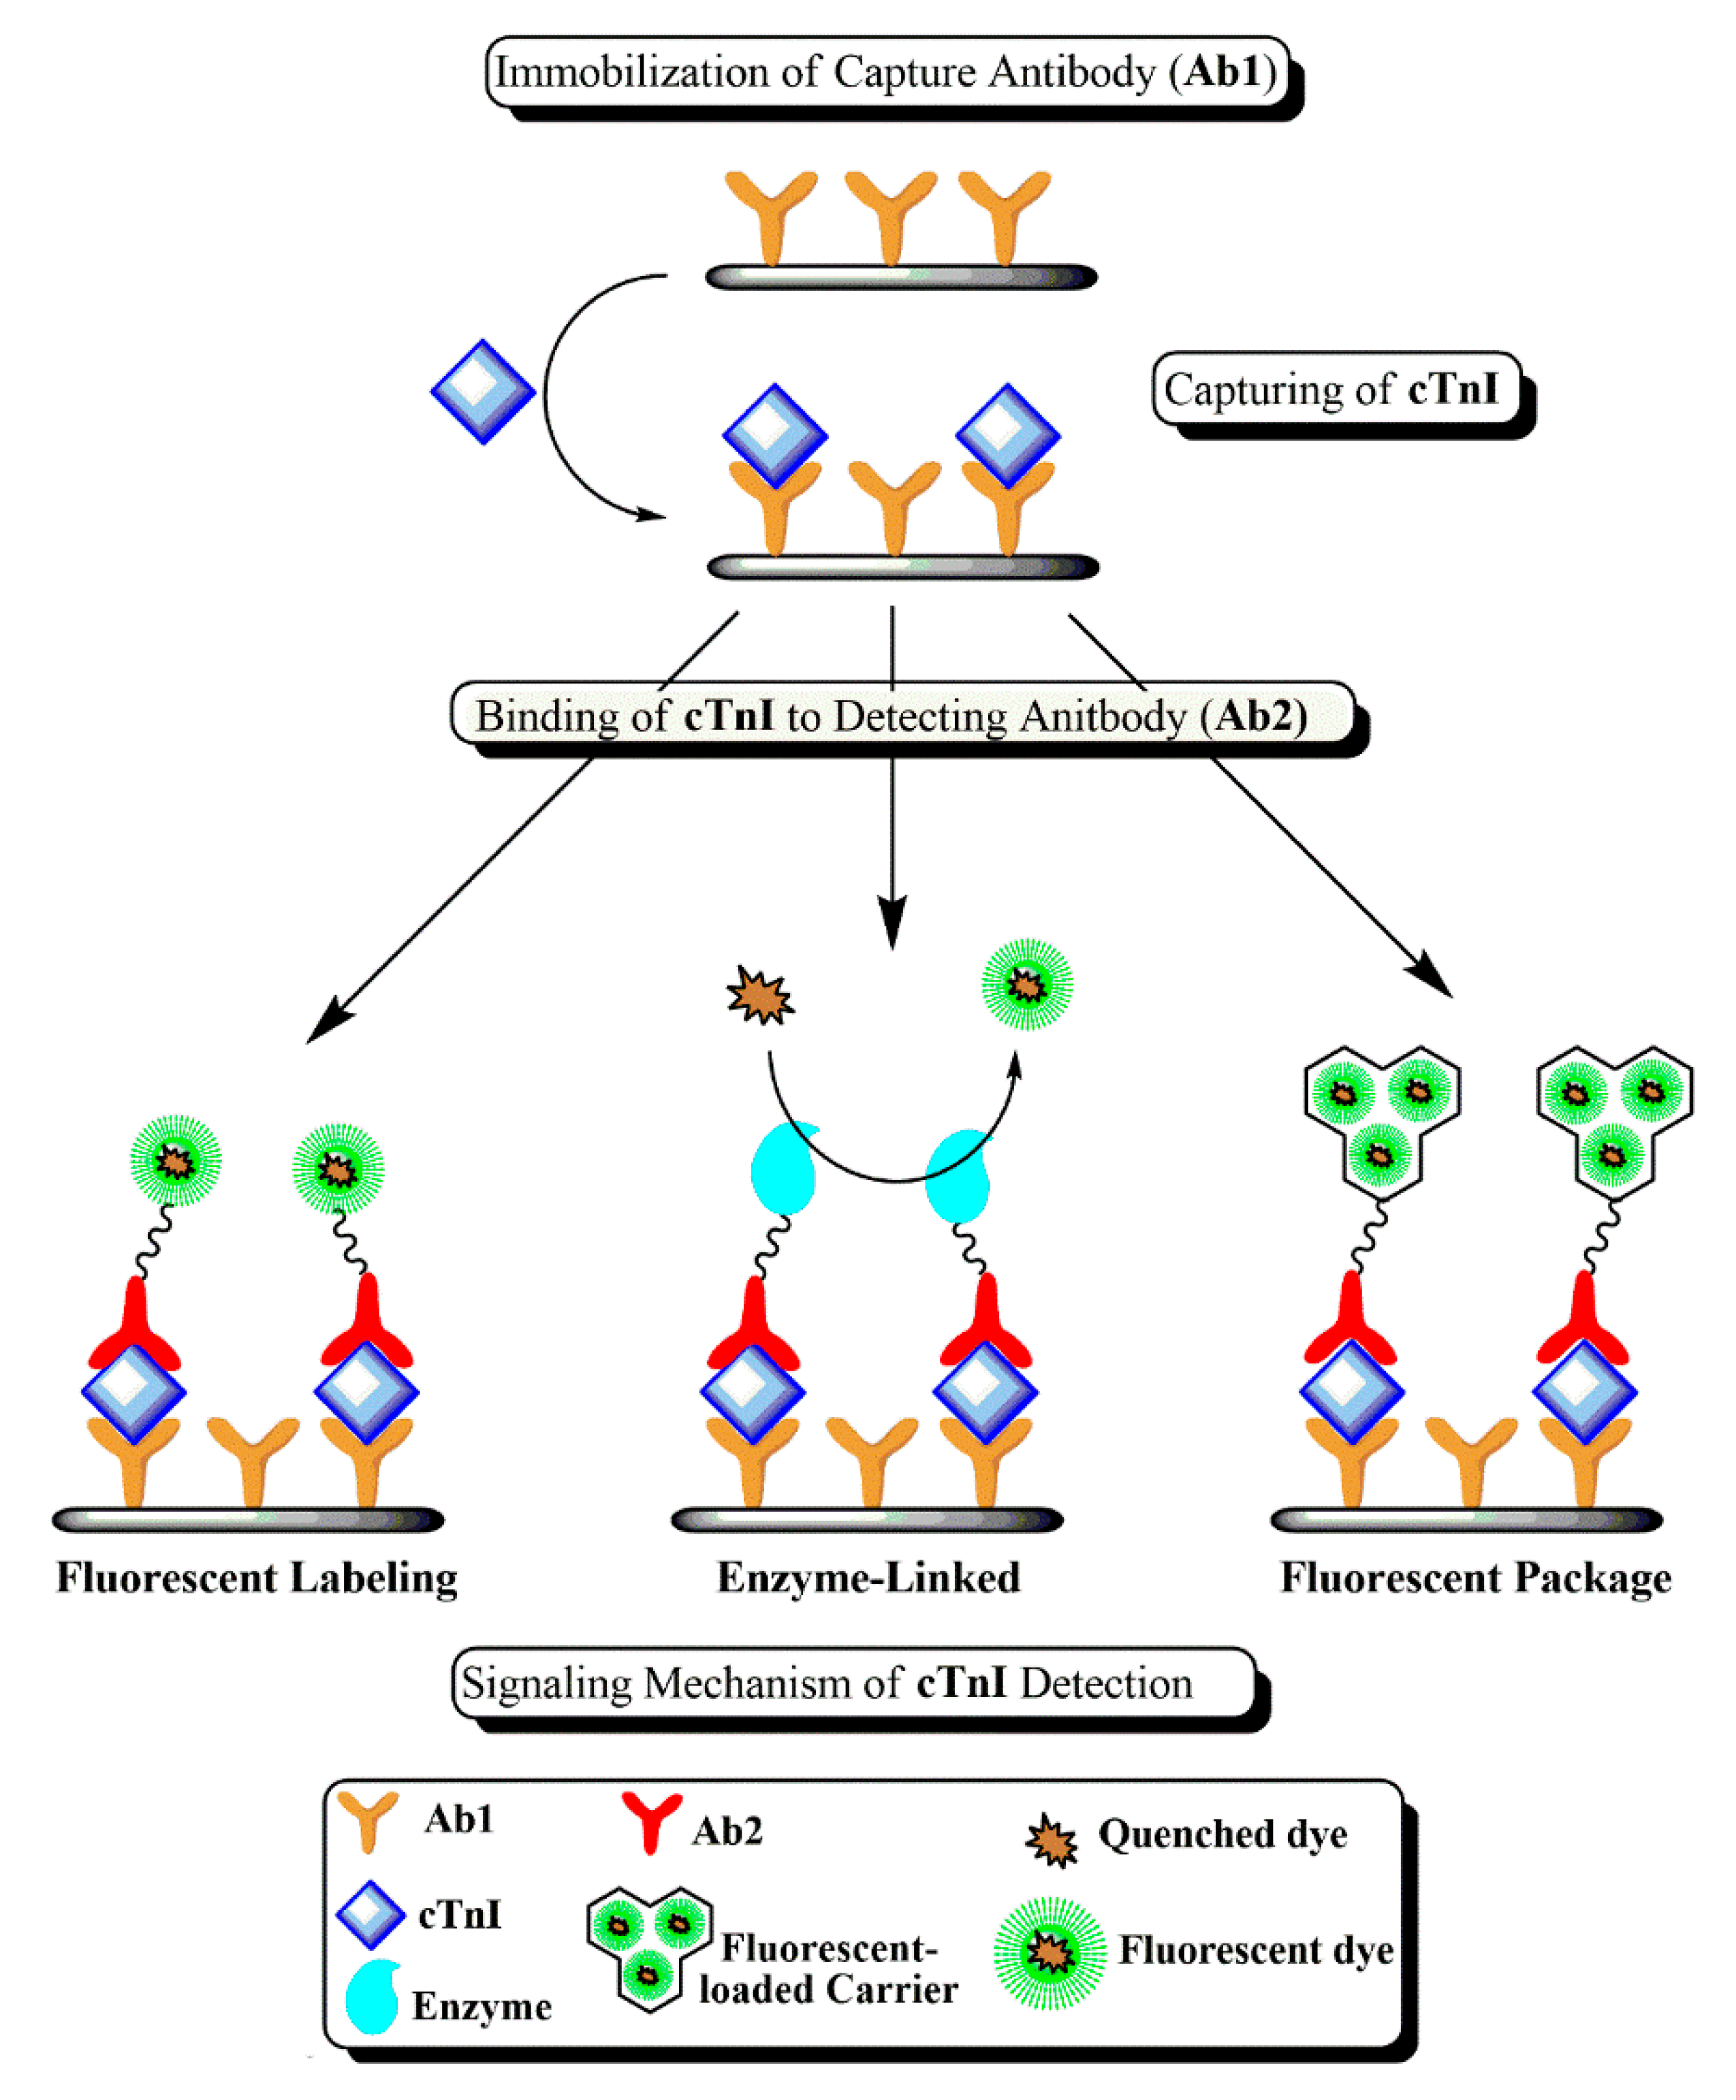 Effect of the multilayer structure on the immunoassay. Antigen-antibody